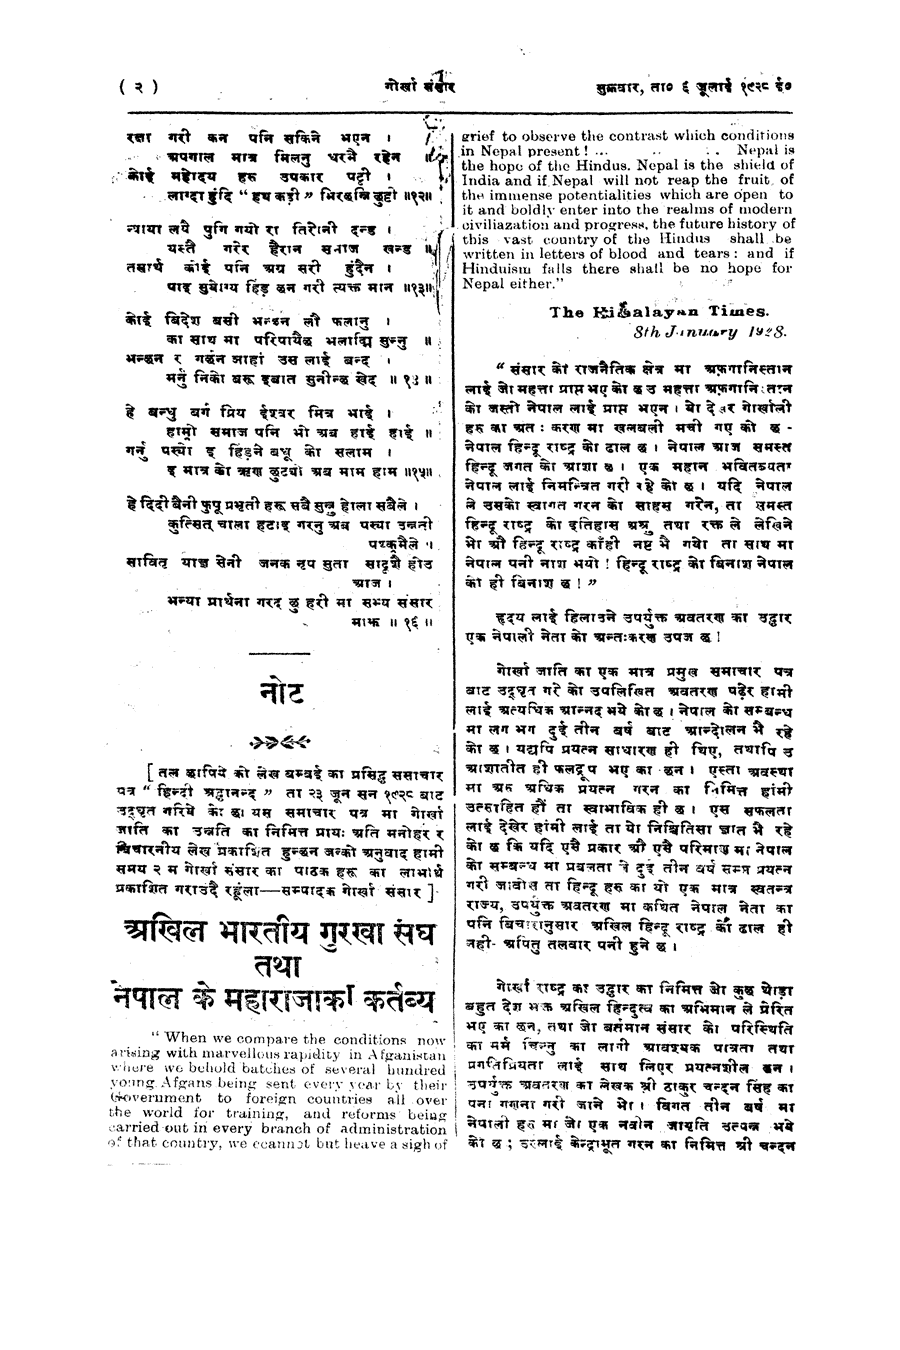 Gorkha Sansar, 6 July 1928, page 2